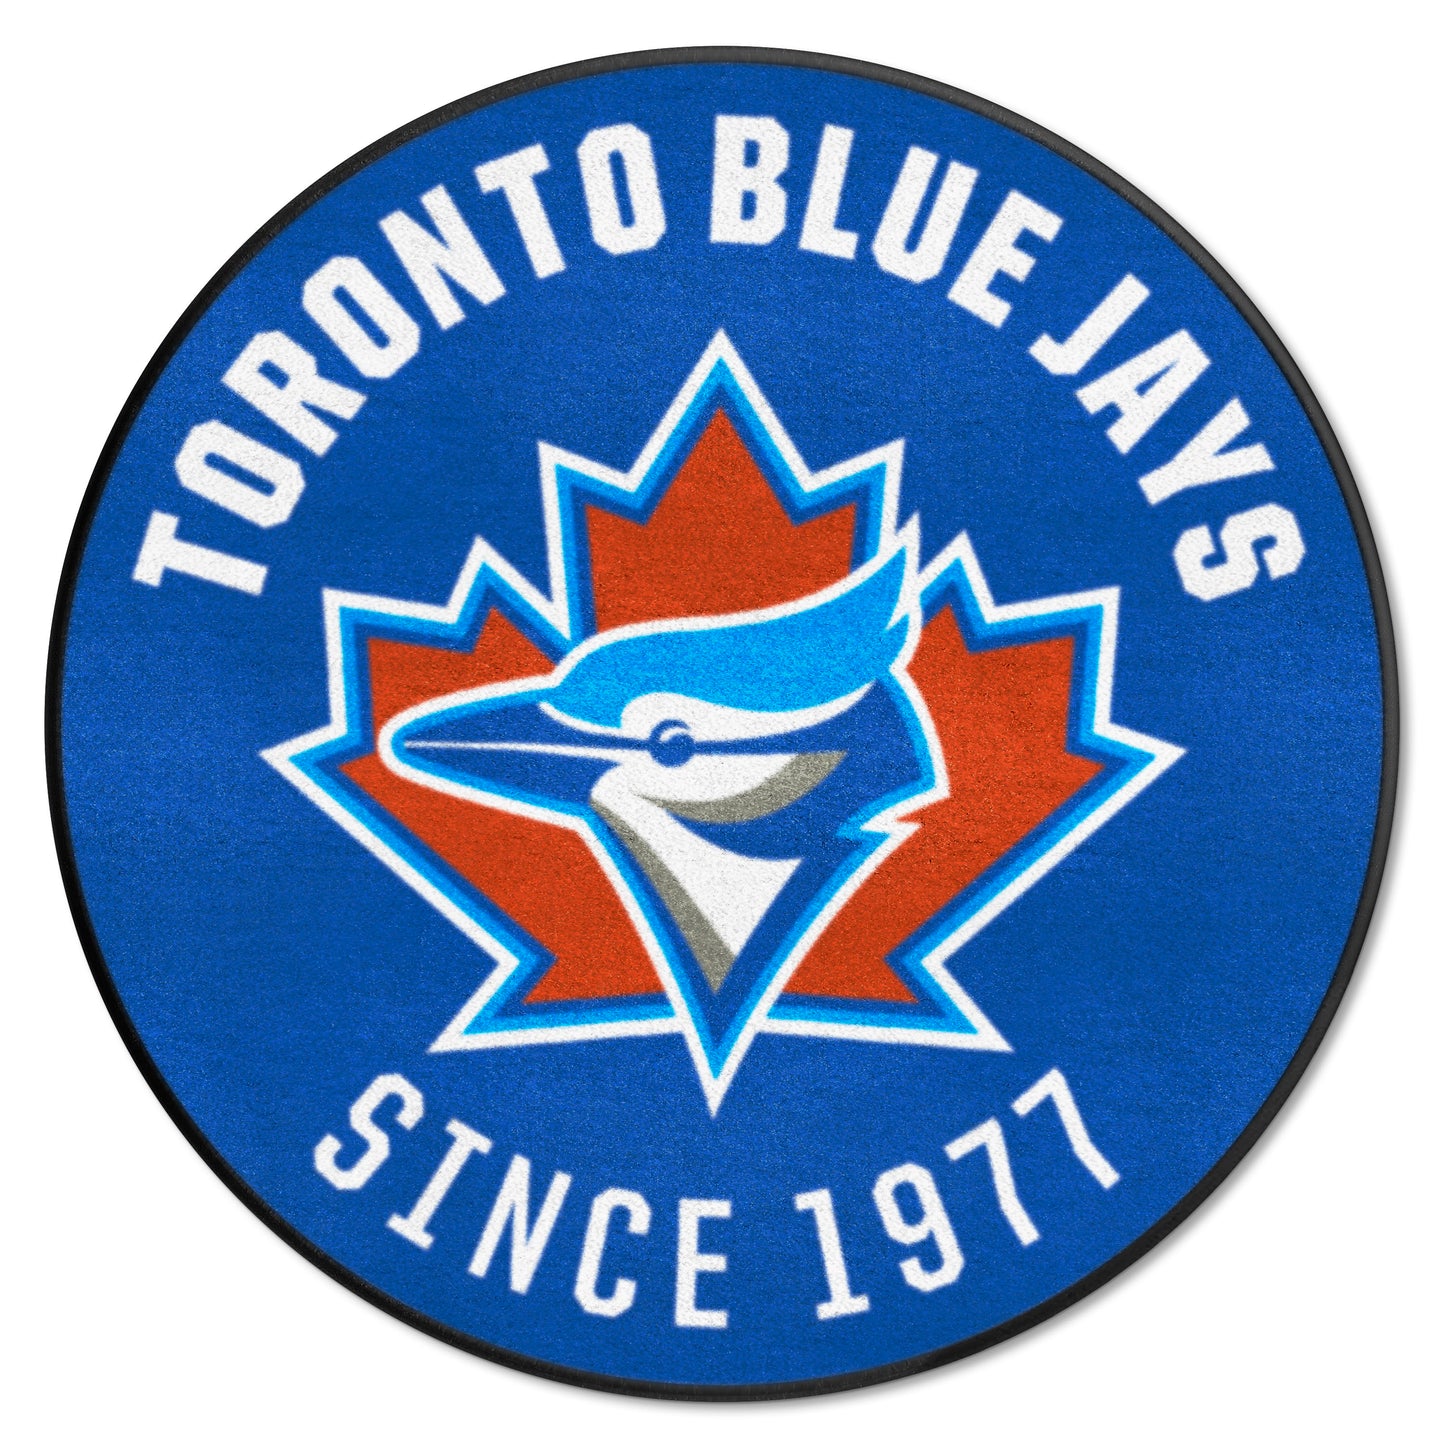 Toronto Blue Jays Roundel Rug - 27in. Diameter - Retro Collection, 1997 Toronto Blue Jays